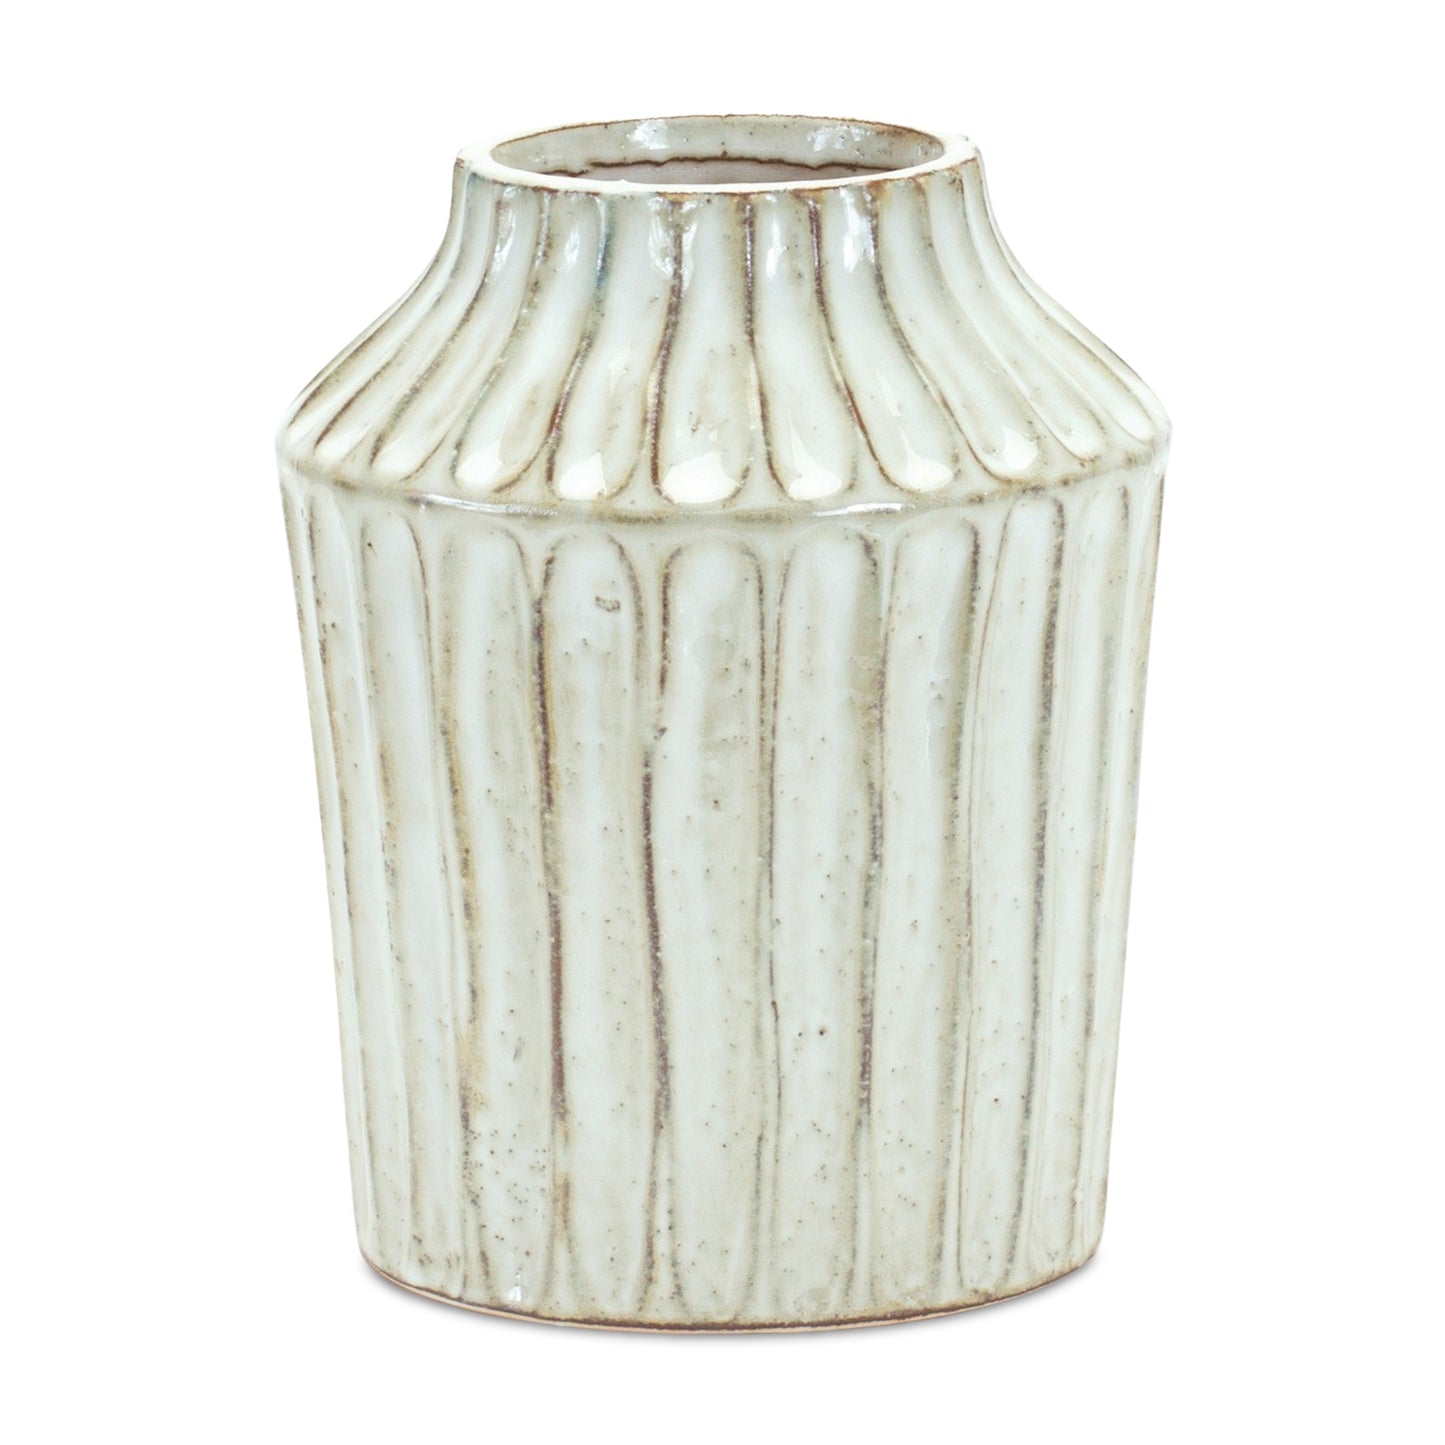 Rustic Carved Clay Vase 7.5"H